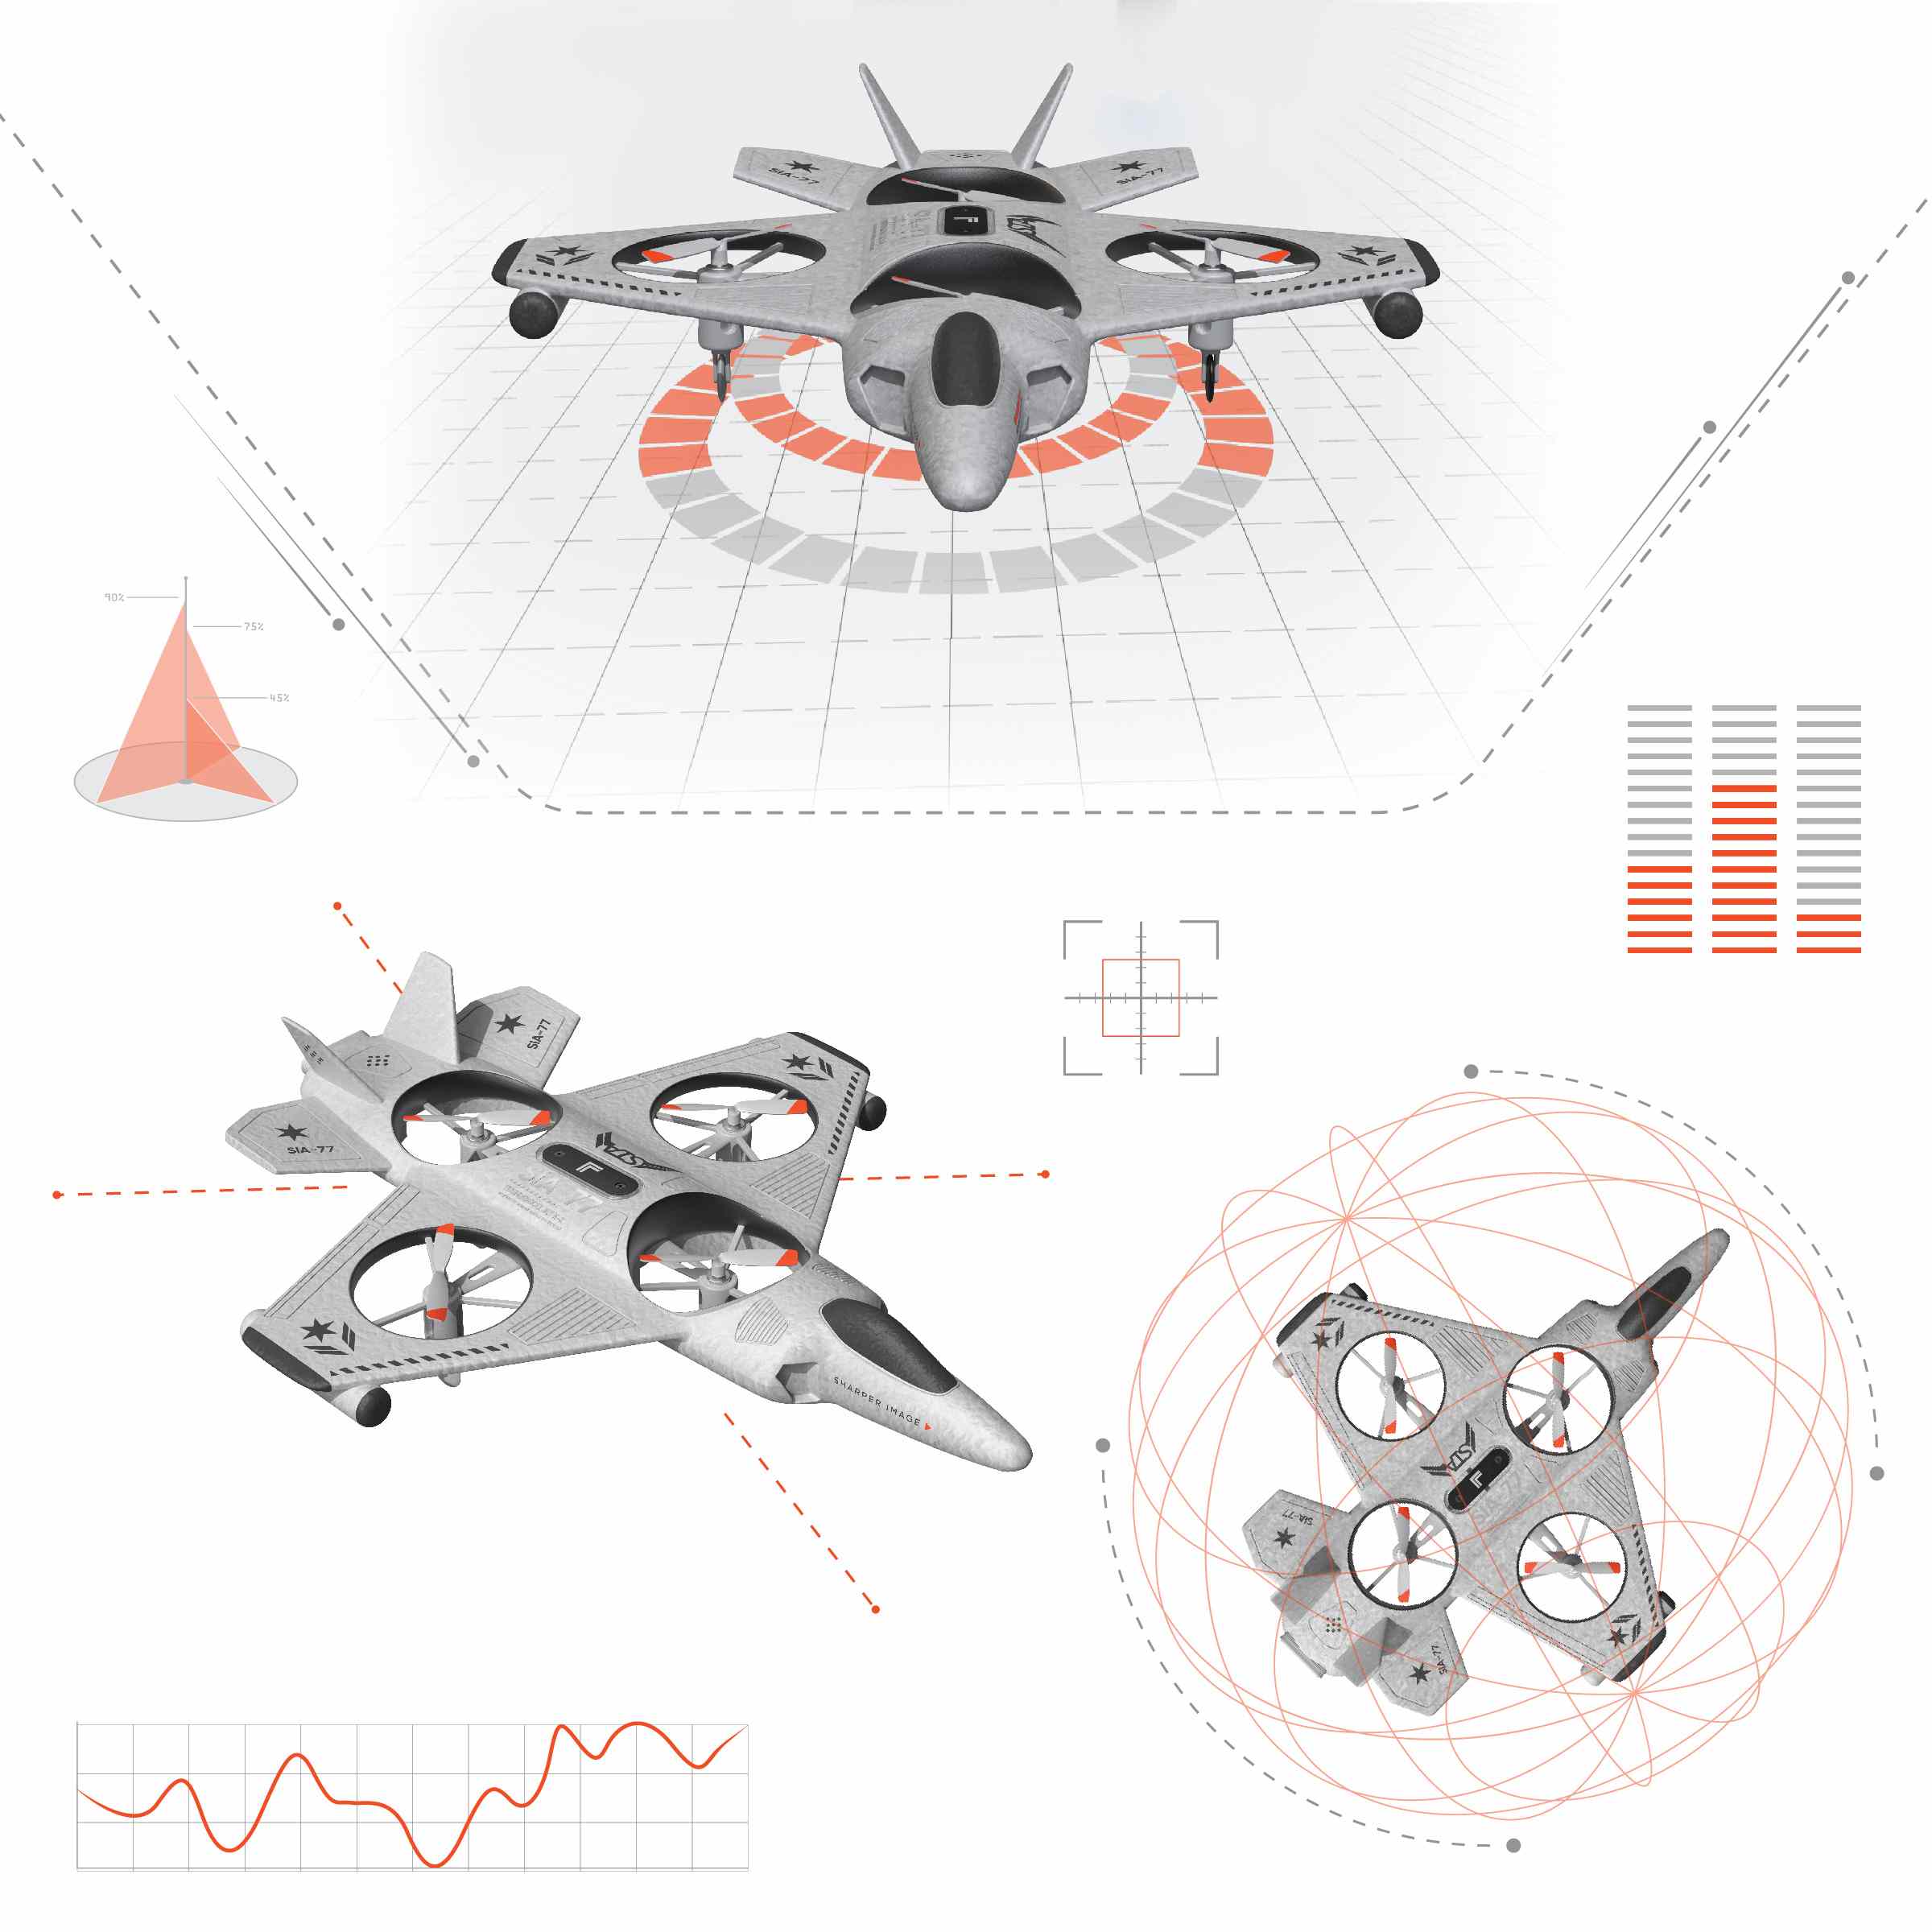 Drone thunderbolt jet x2 - Sharper Image